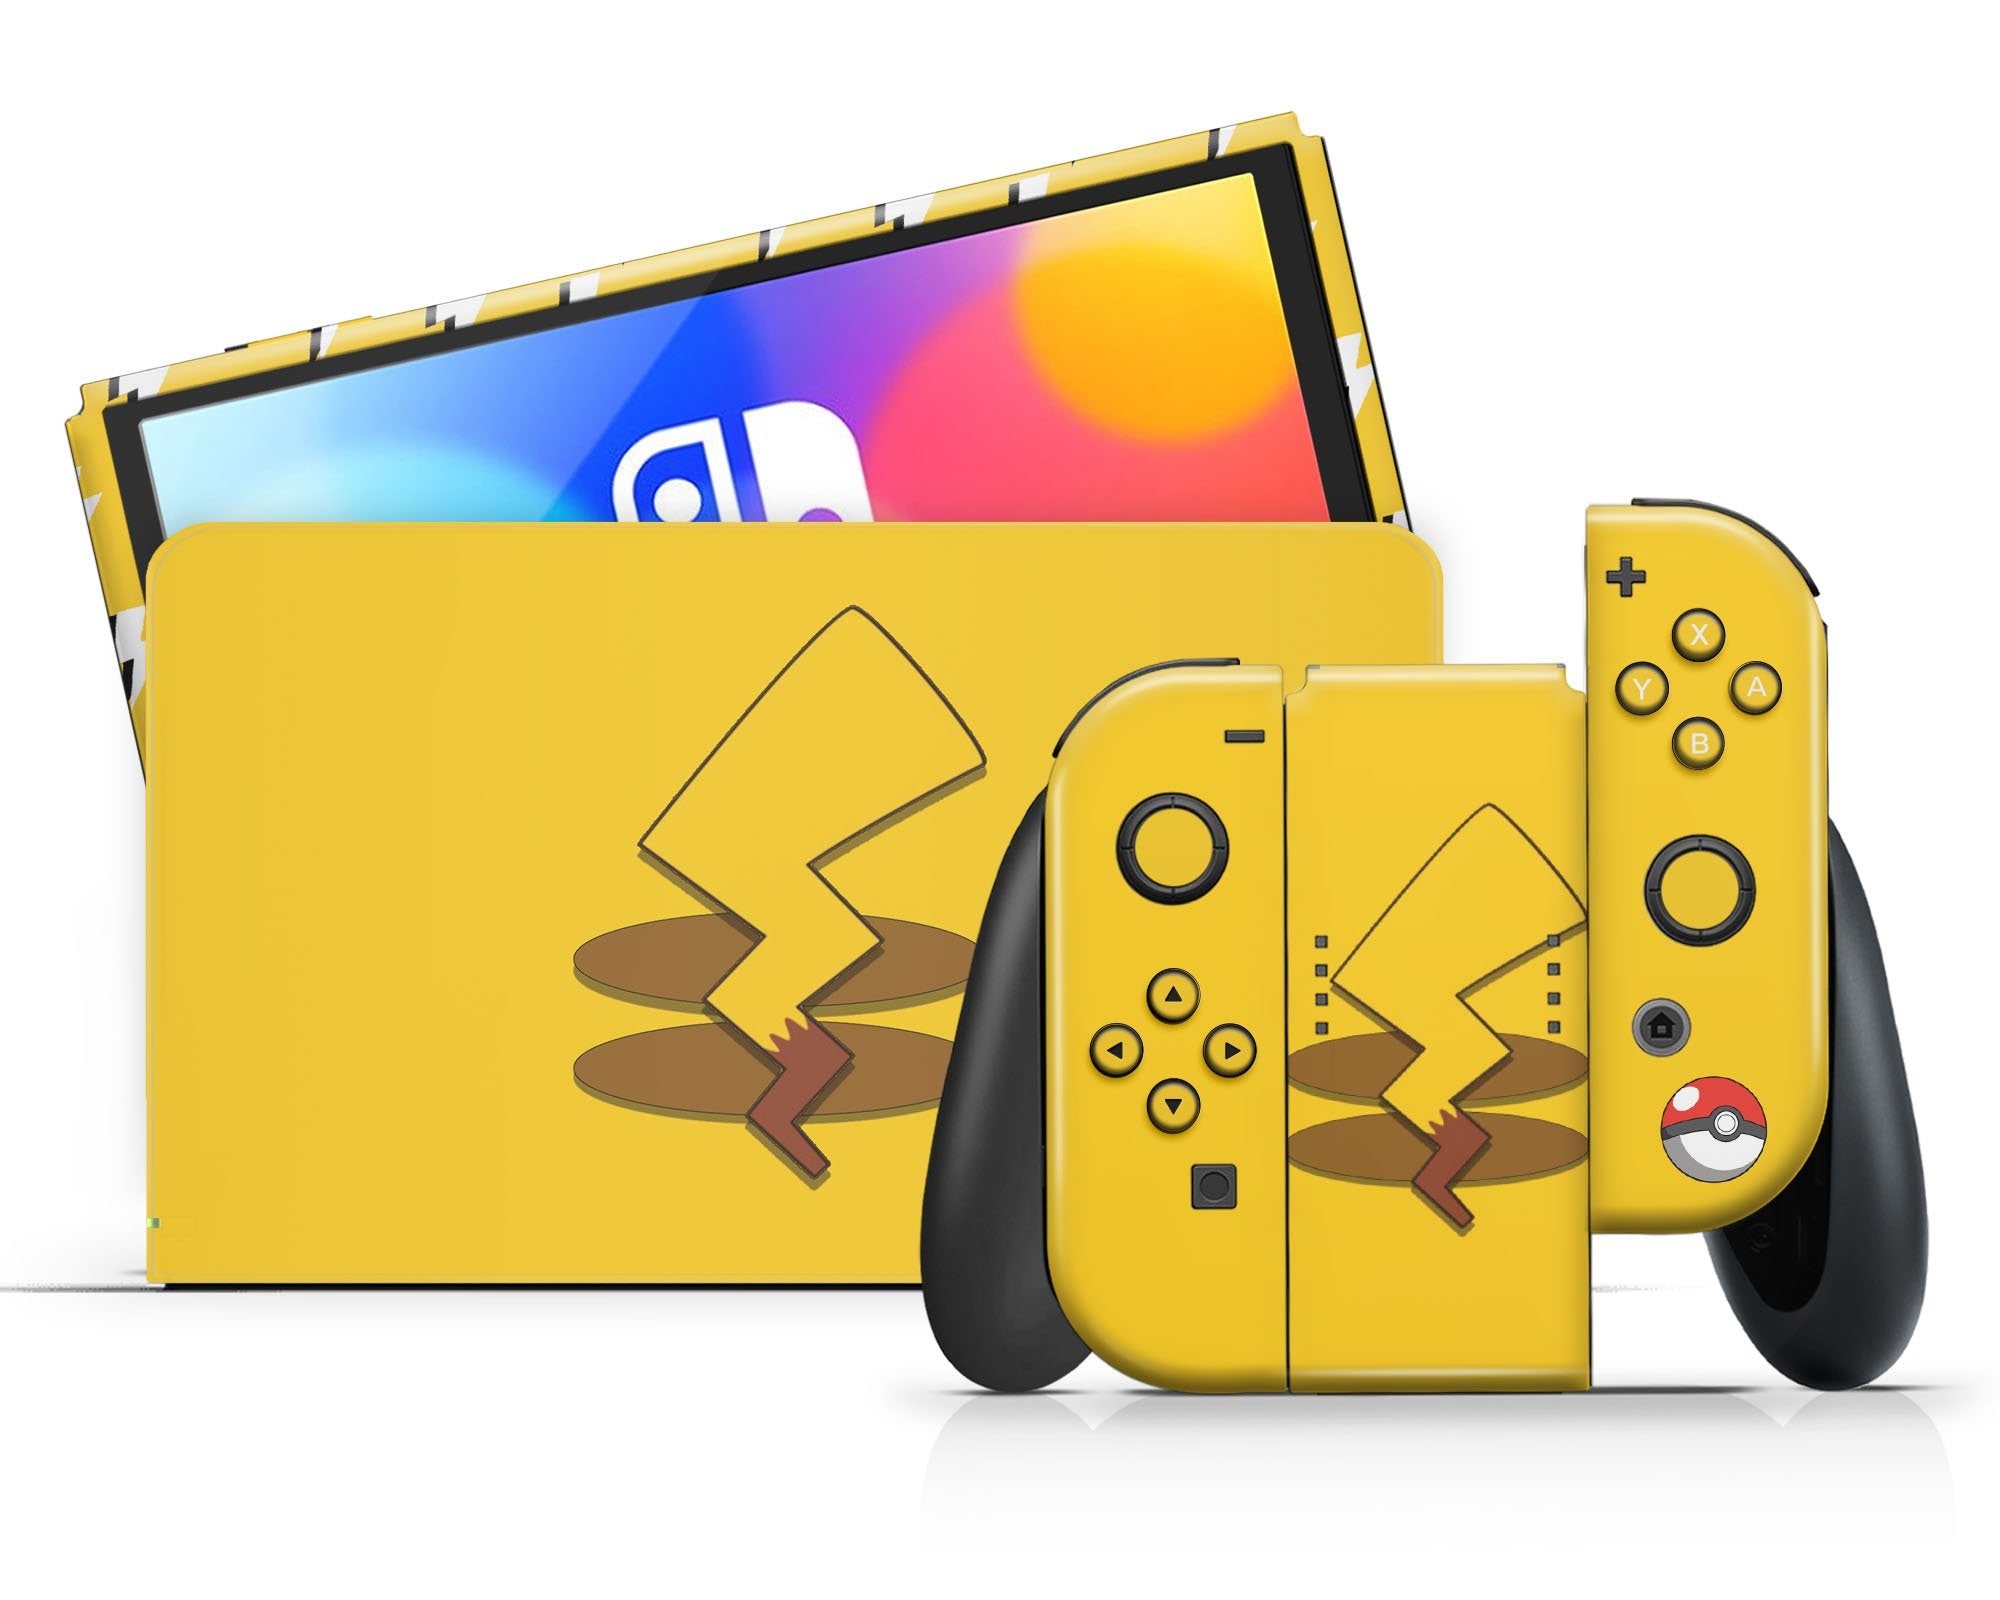 Xbox Series S Slim Console Controllers Skins Sticker Decal Cute Pikachu  Pokemon 